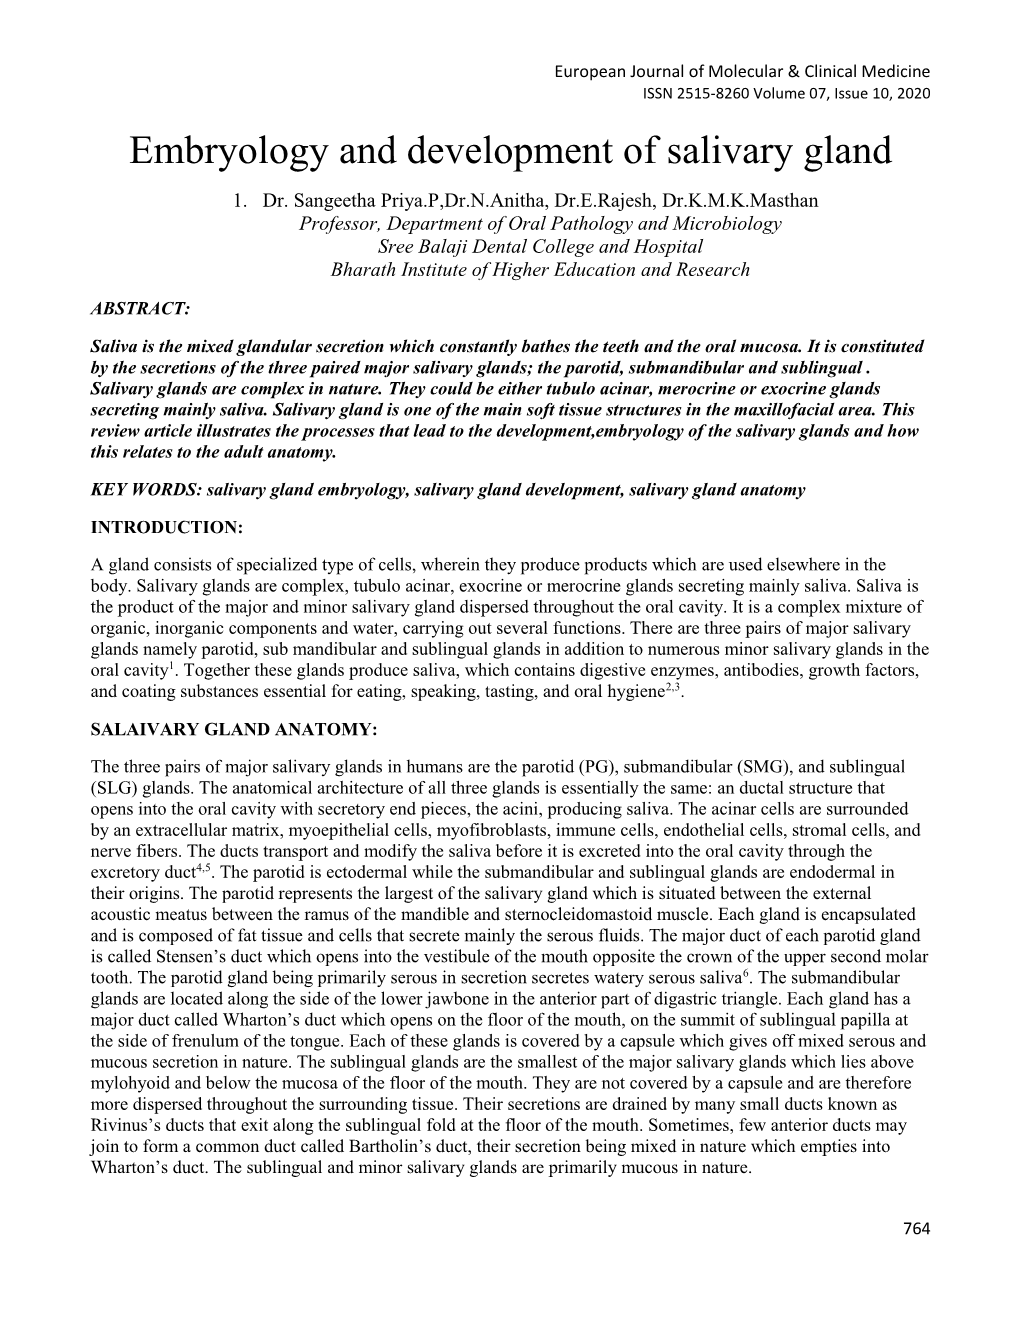 Embryology and Development of Salivary Gland 1